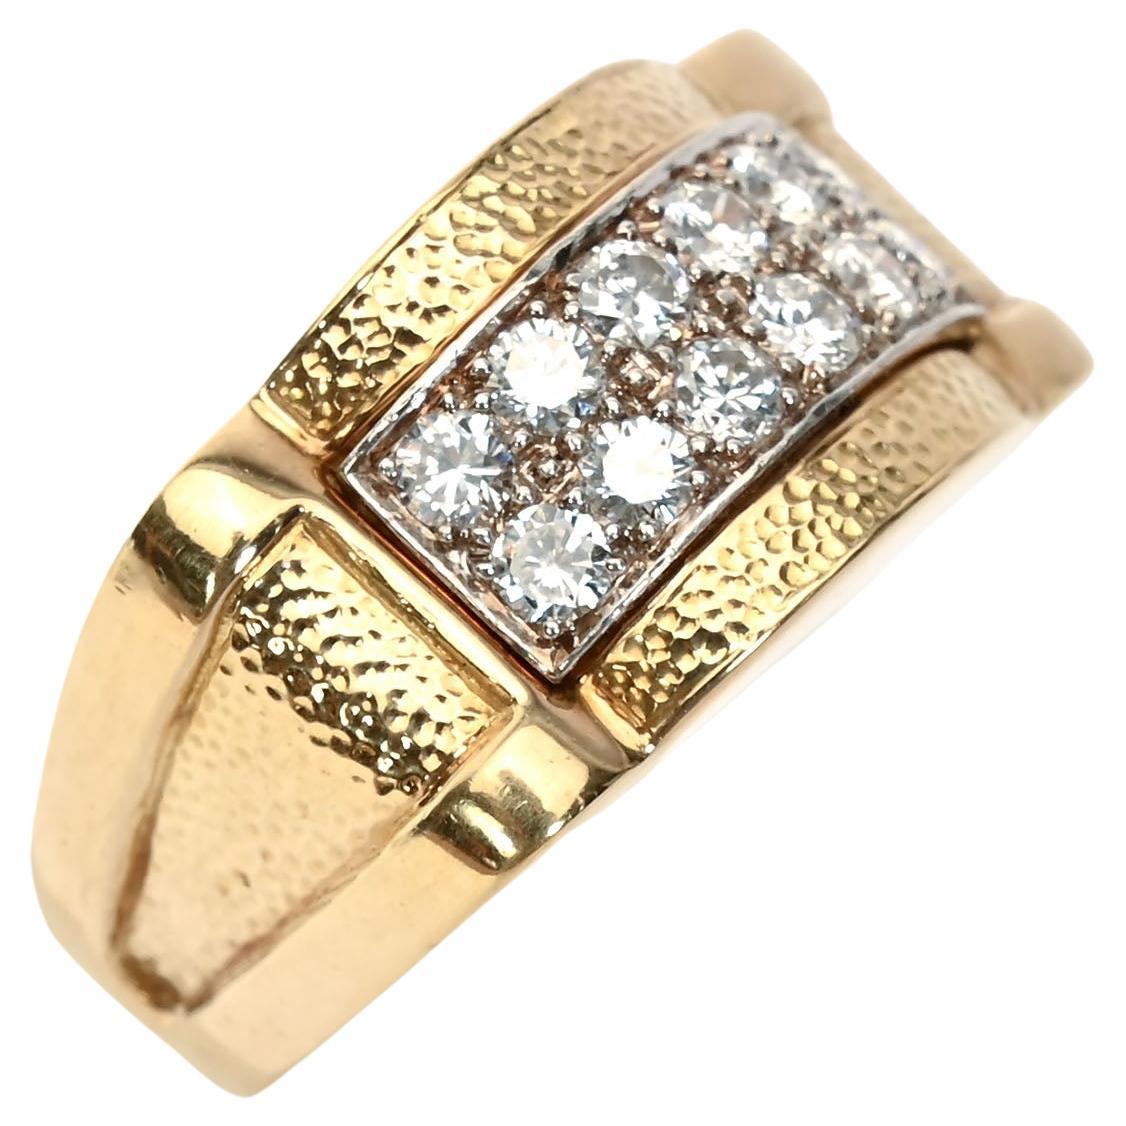 David Webb Gold and Diamonds Ring